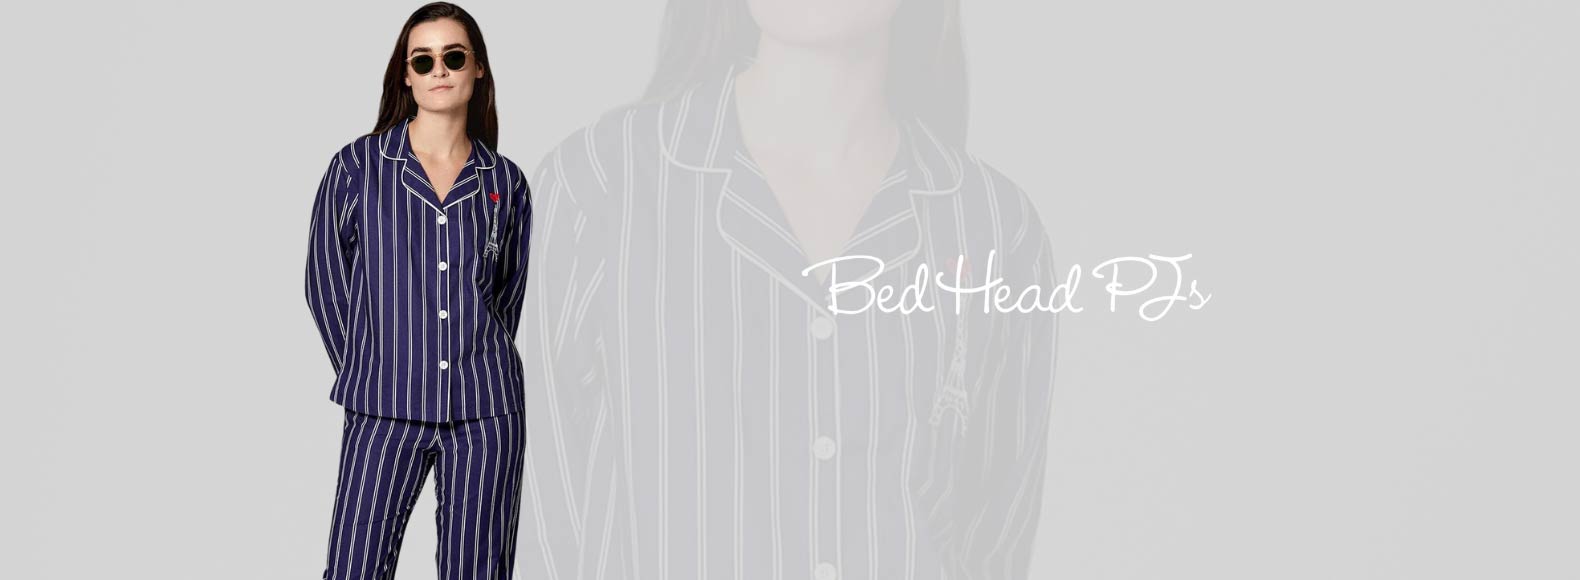 Bed Head Pajamas & Sleepwear Brand Collections